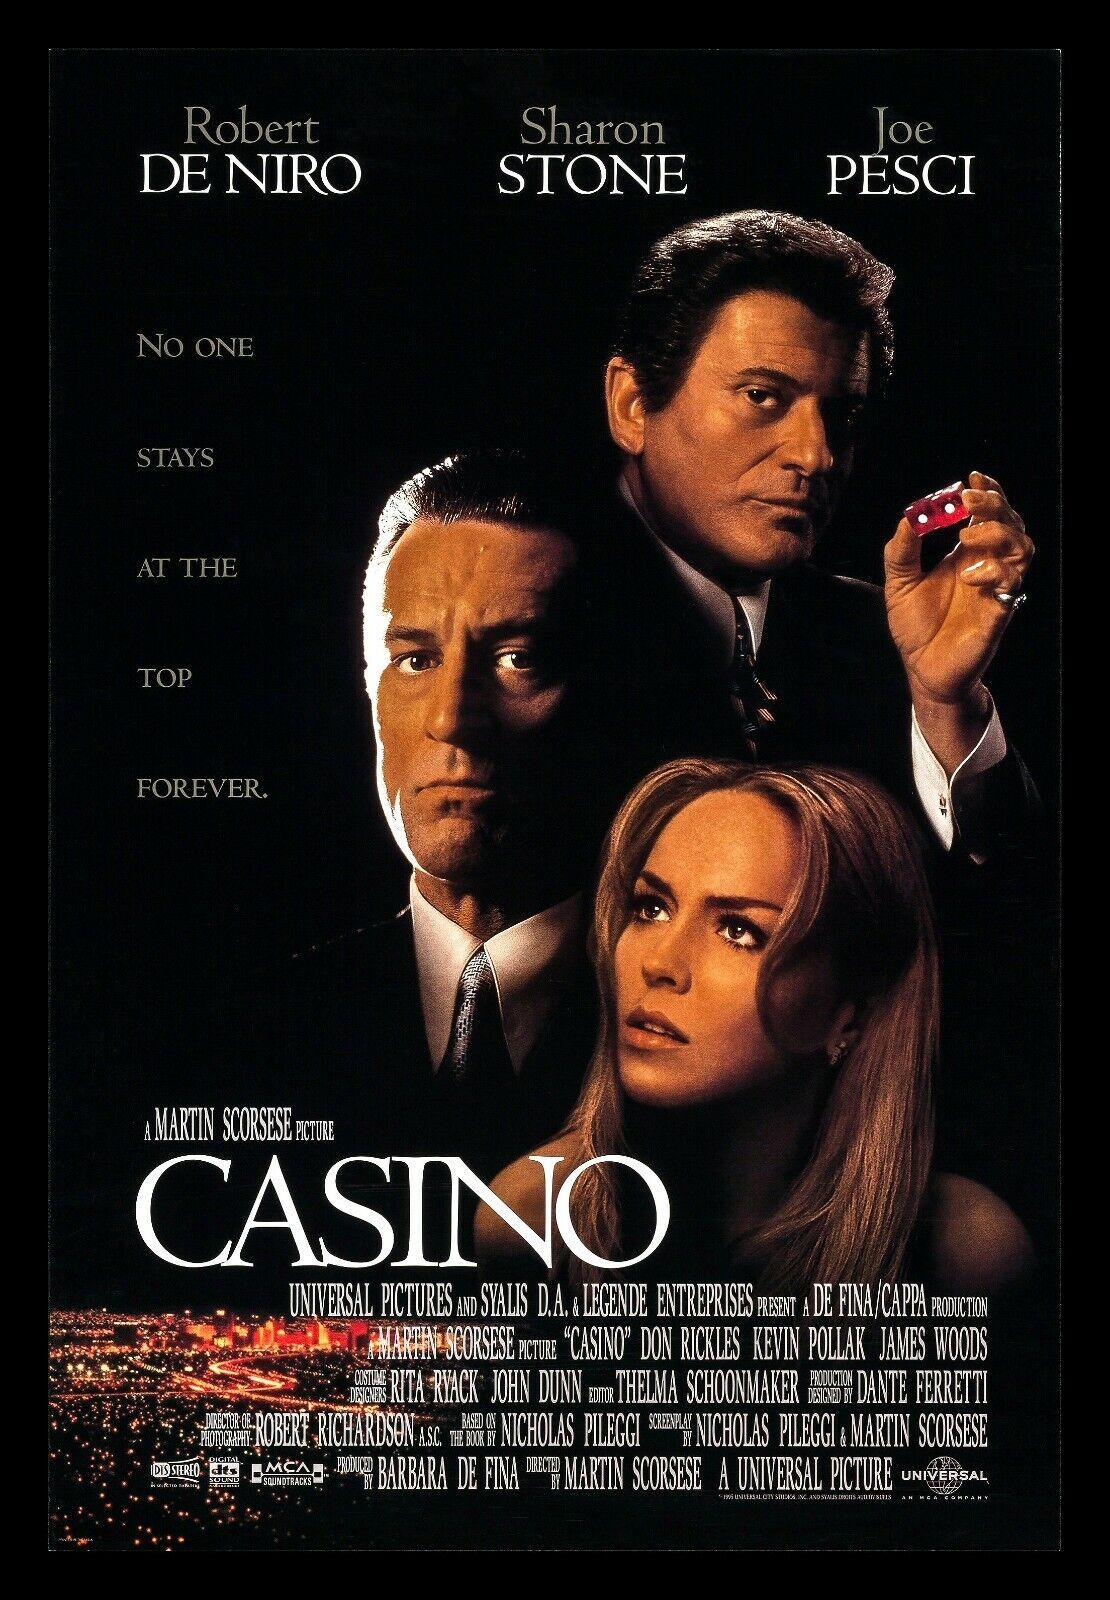 The poster for Martin Scorsese's Casino